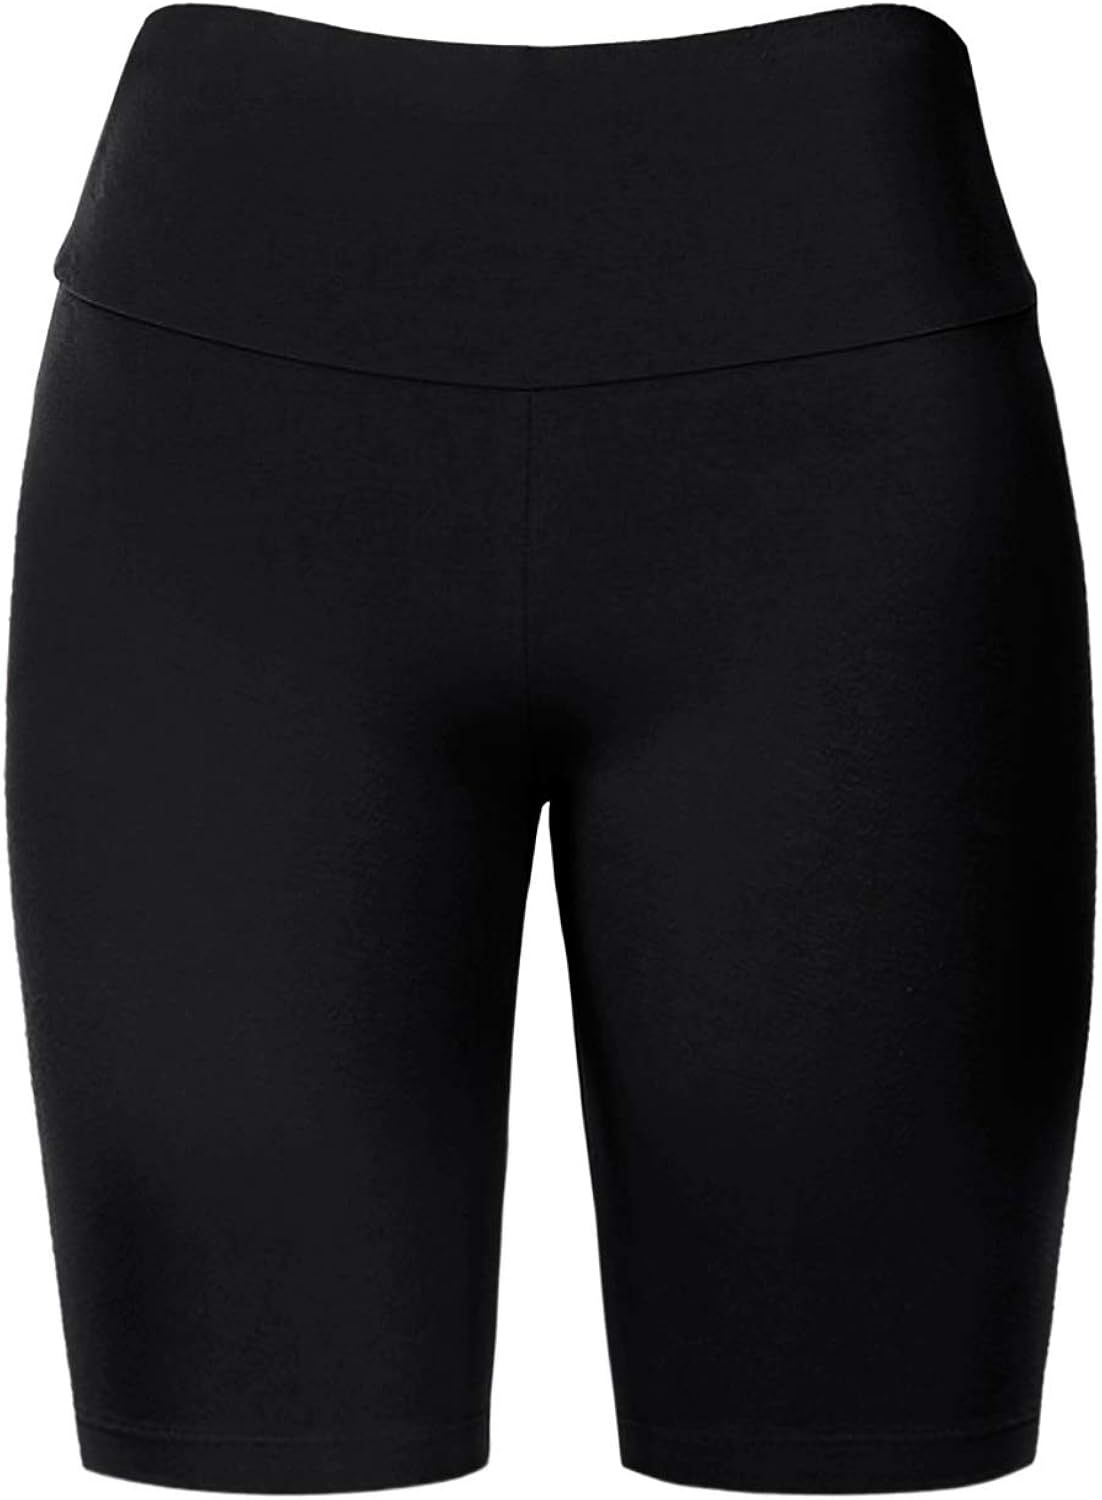 HATOPANTS Women's Workout Cotton High Waisted Mid Thigh Exercise Bike Shorts NEWCAMEL S at Amazon... | Amazon (US)